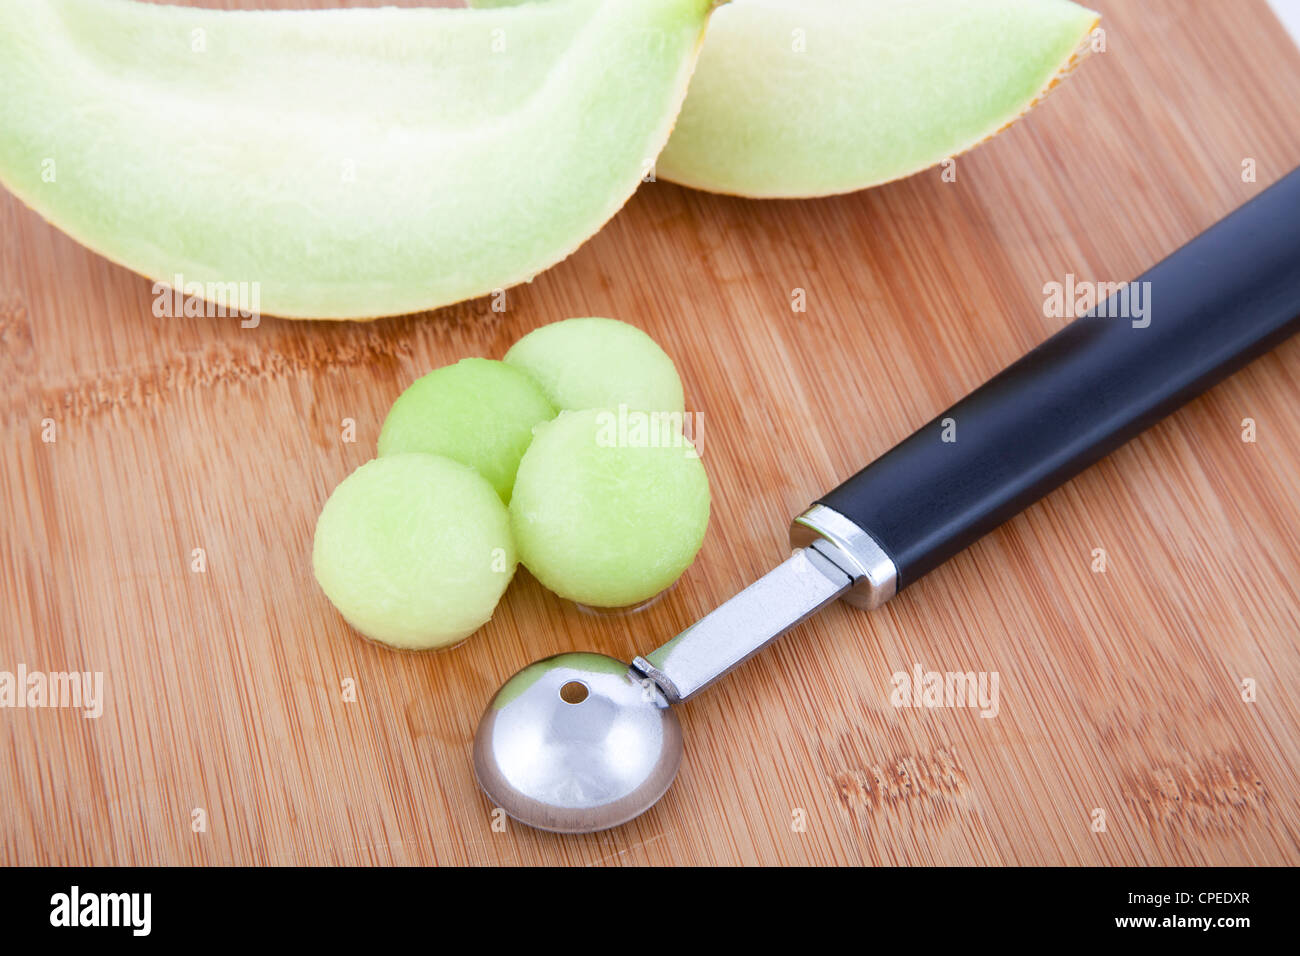 https://c8.alamy.com/comp/CPEDXR/fresh-honeydew-melon-balls-on-cutting-board-with-melon-baller-CPEDXR.jpg